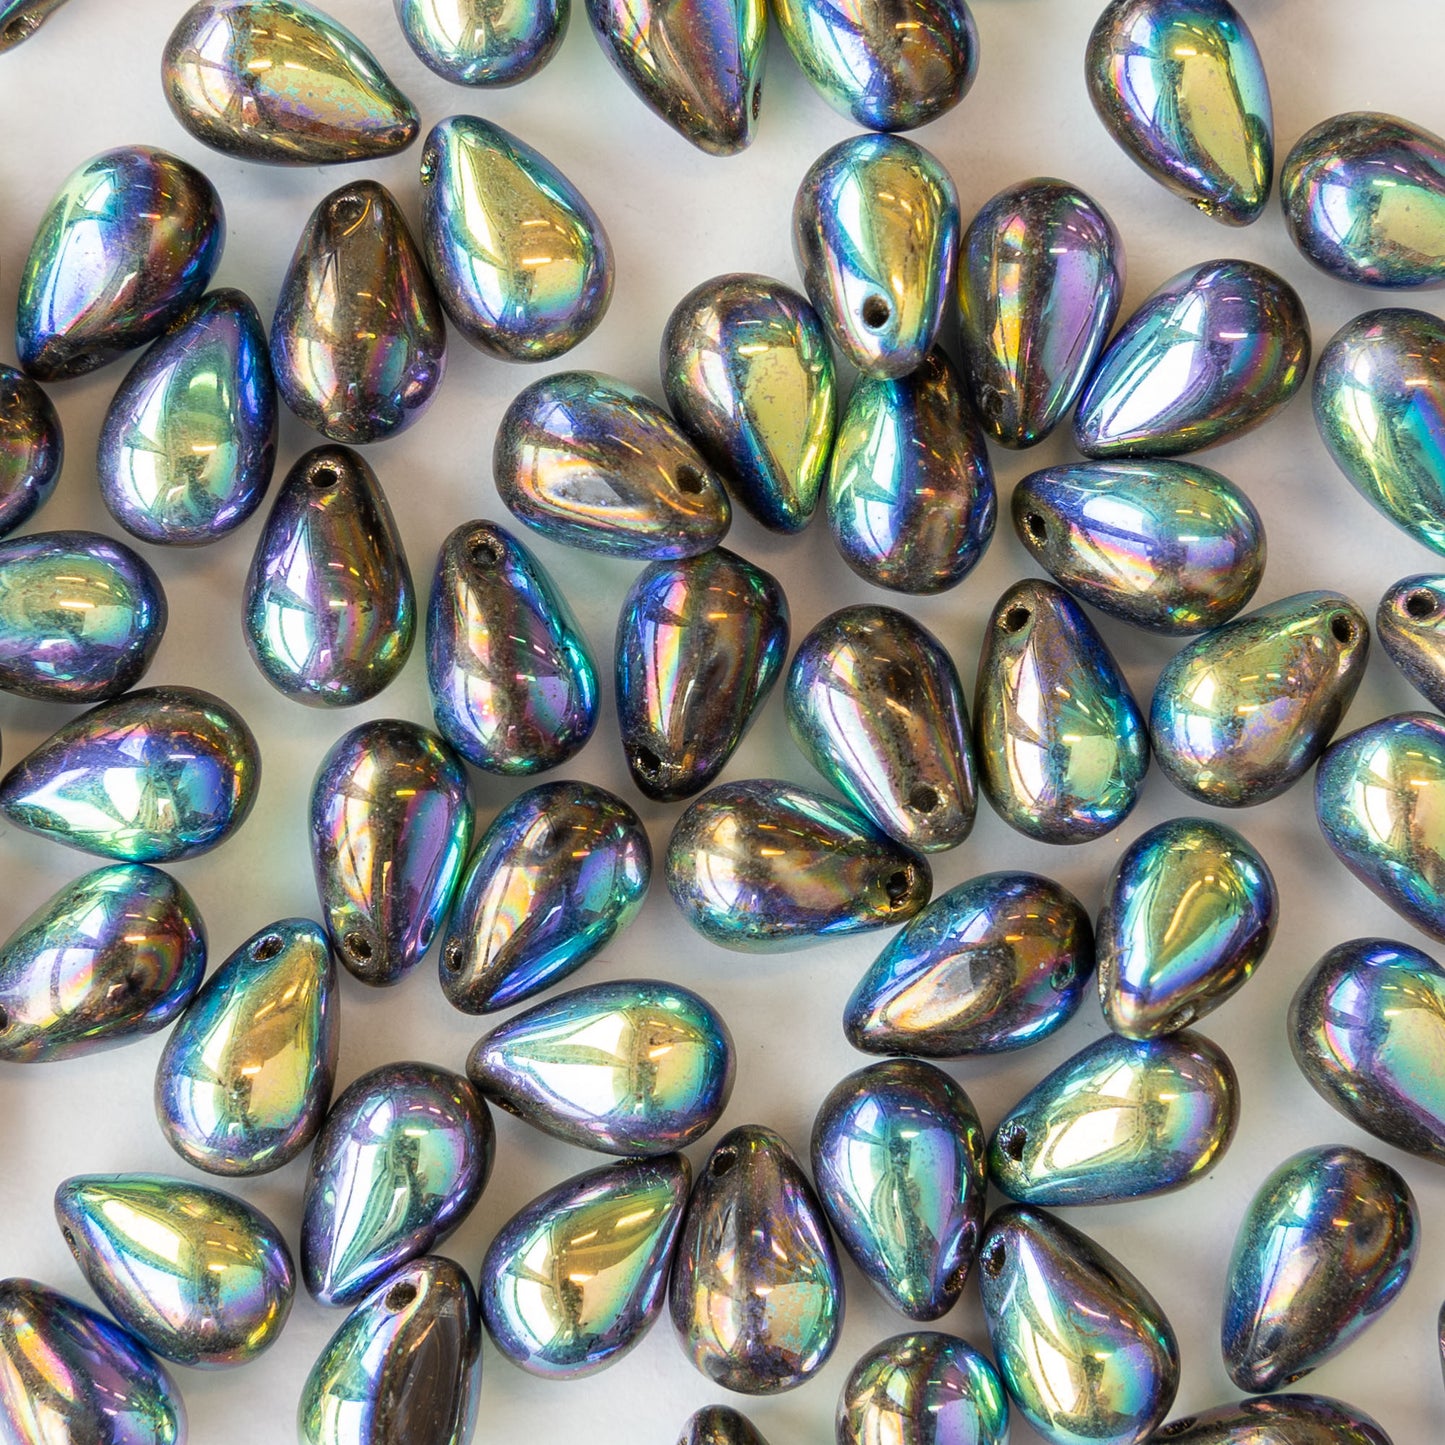 Load image into Gallery viewer, 6x9mm Glass Teardrop Beads - Black Iridescent Iris - 30 Beads
